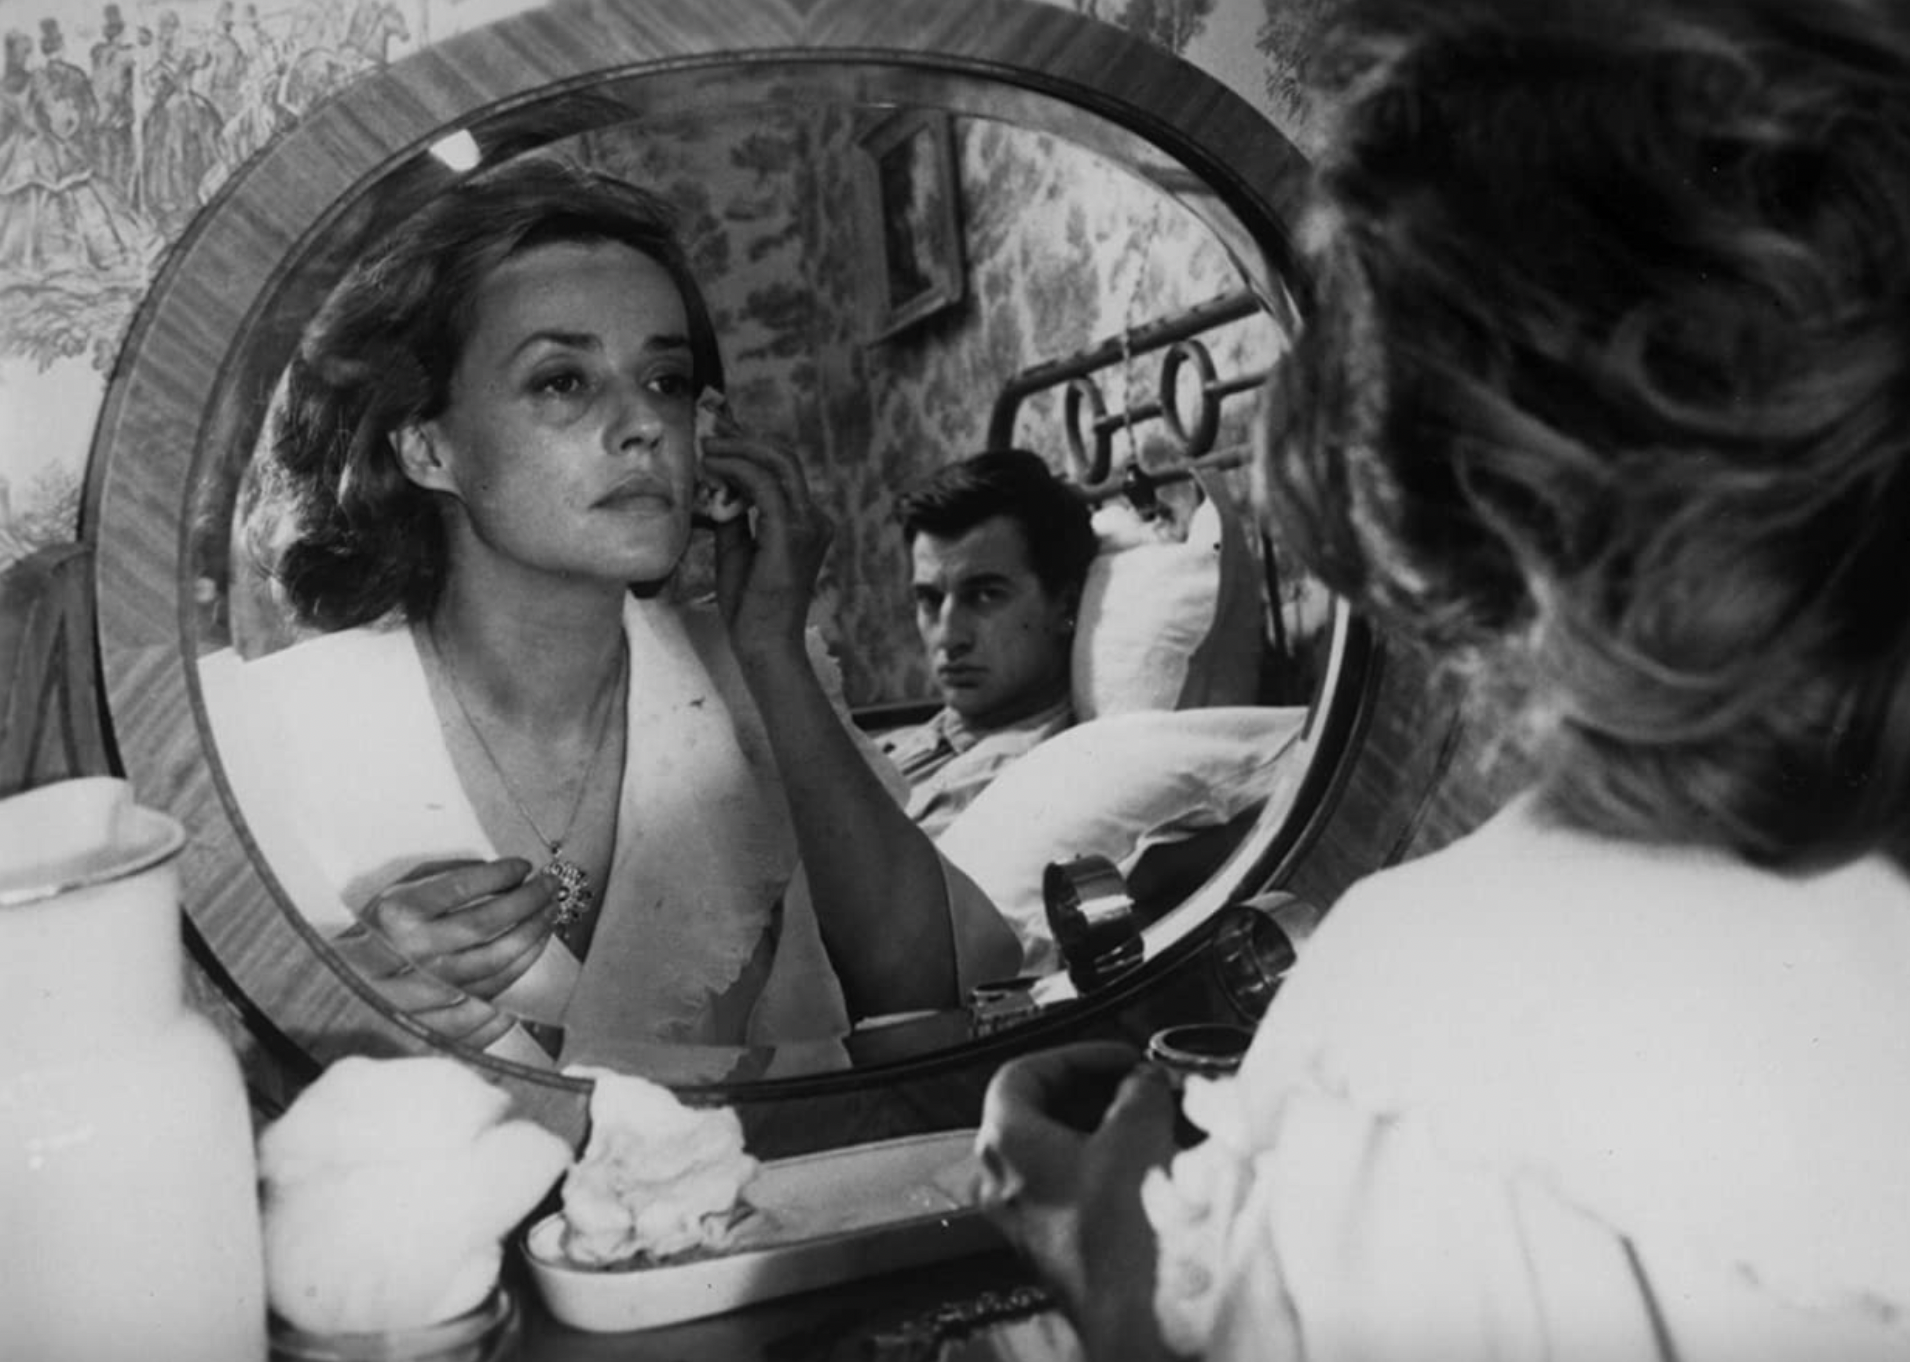 Jeanne Moreau and Henri Serre in "Jules and Jim".